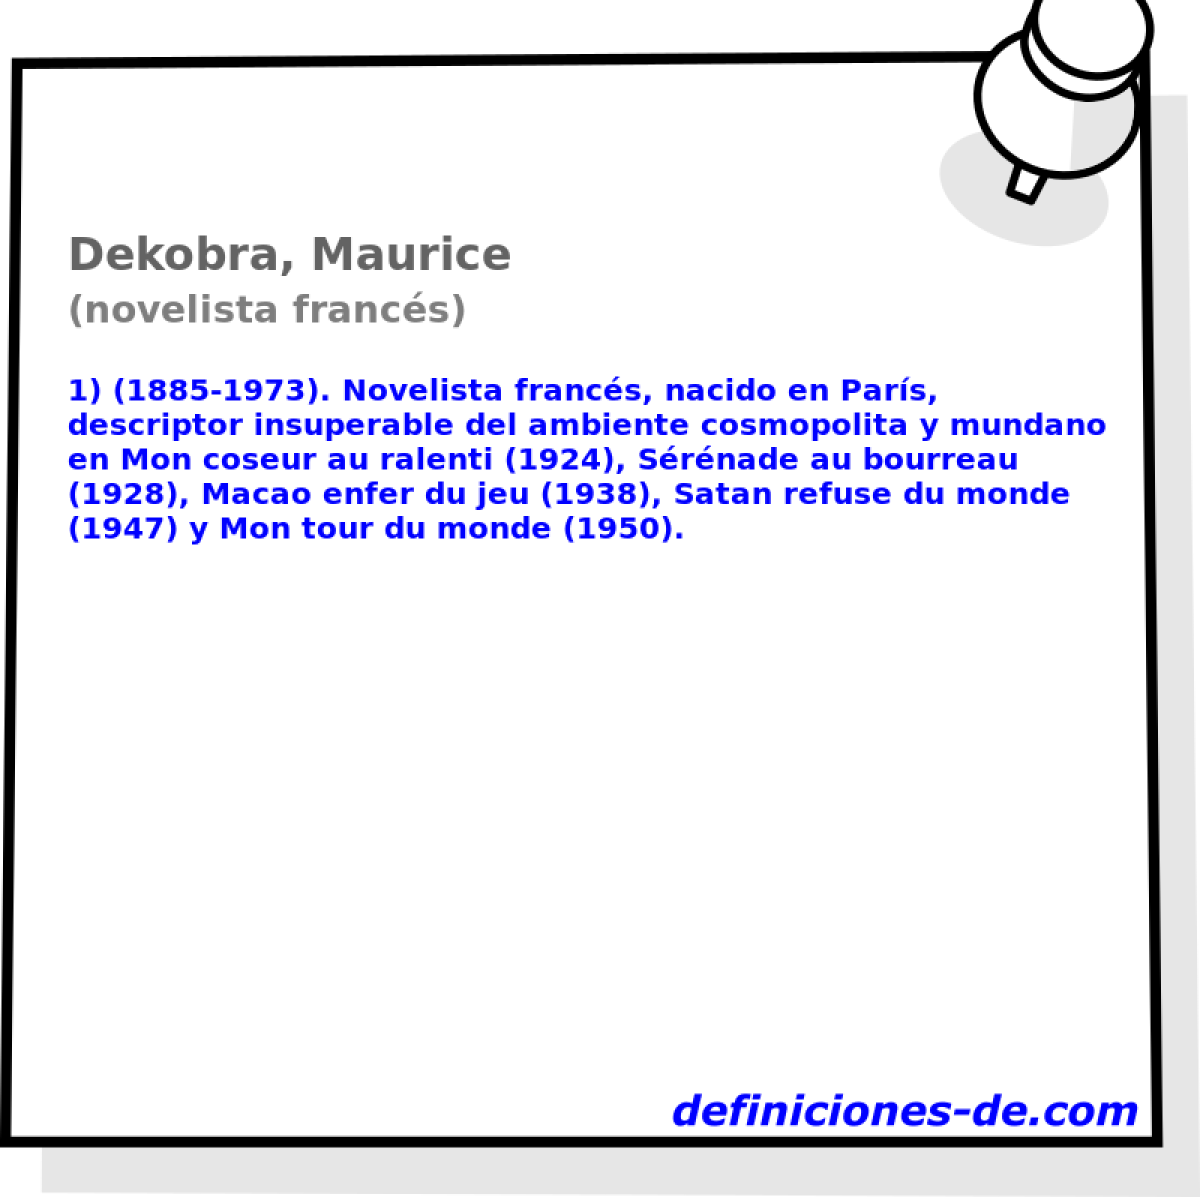 Dekobra, Maurice (novelista francs)